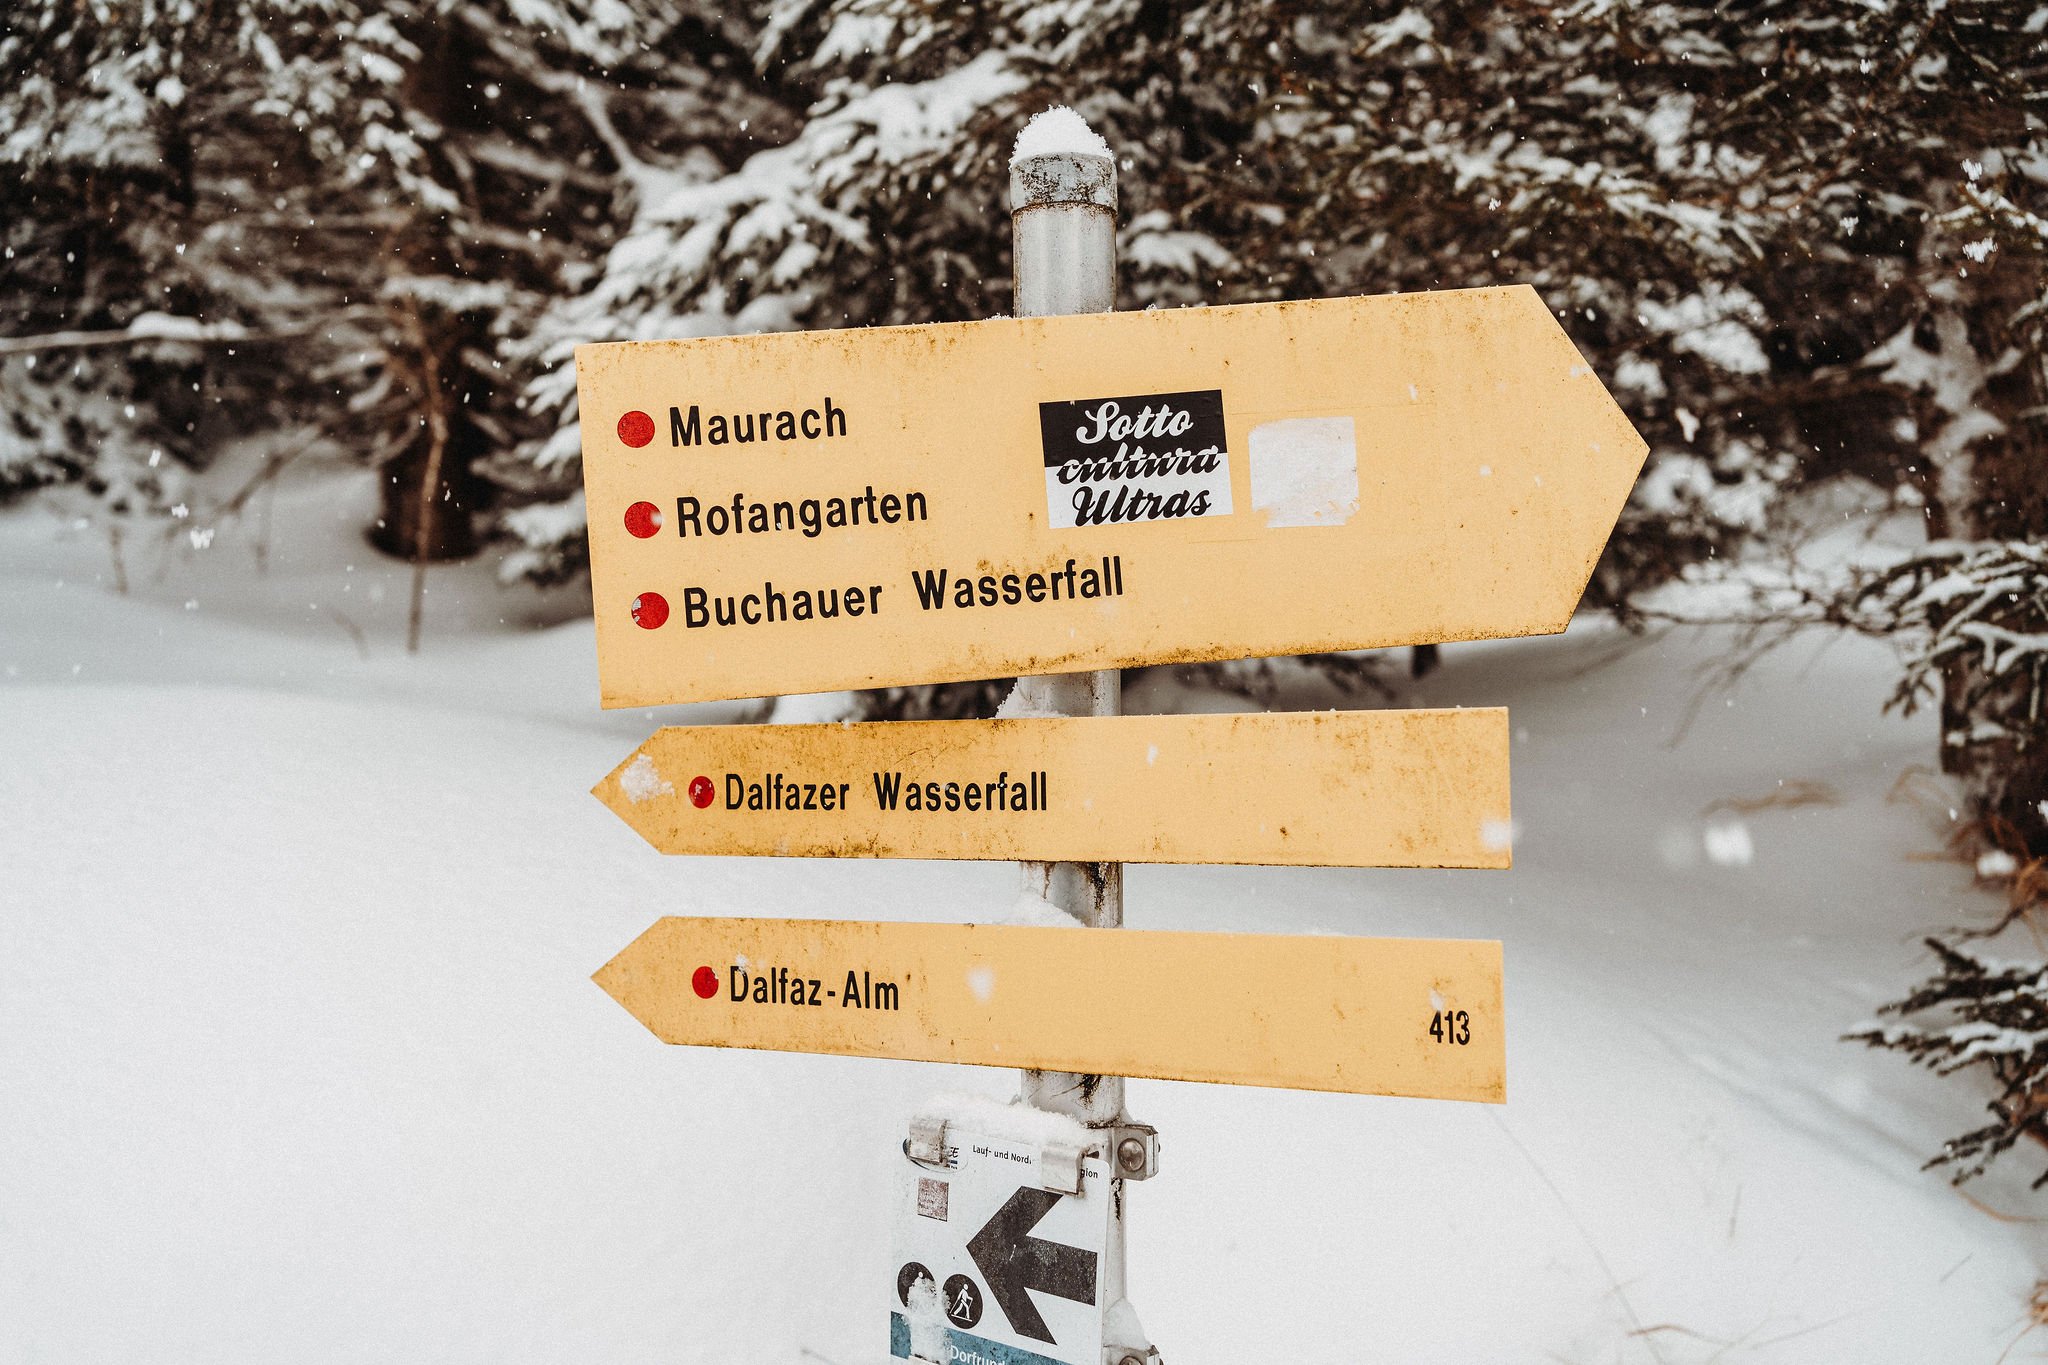 way-up-high-elopements-tirol-achensee-tyrol-small-wedding-adventure-hochzeit-eloping-winter-snow-delfazer-waterfall (133).jpg